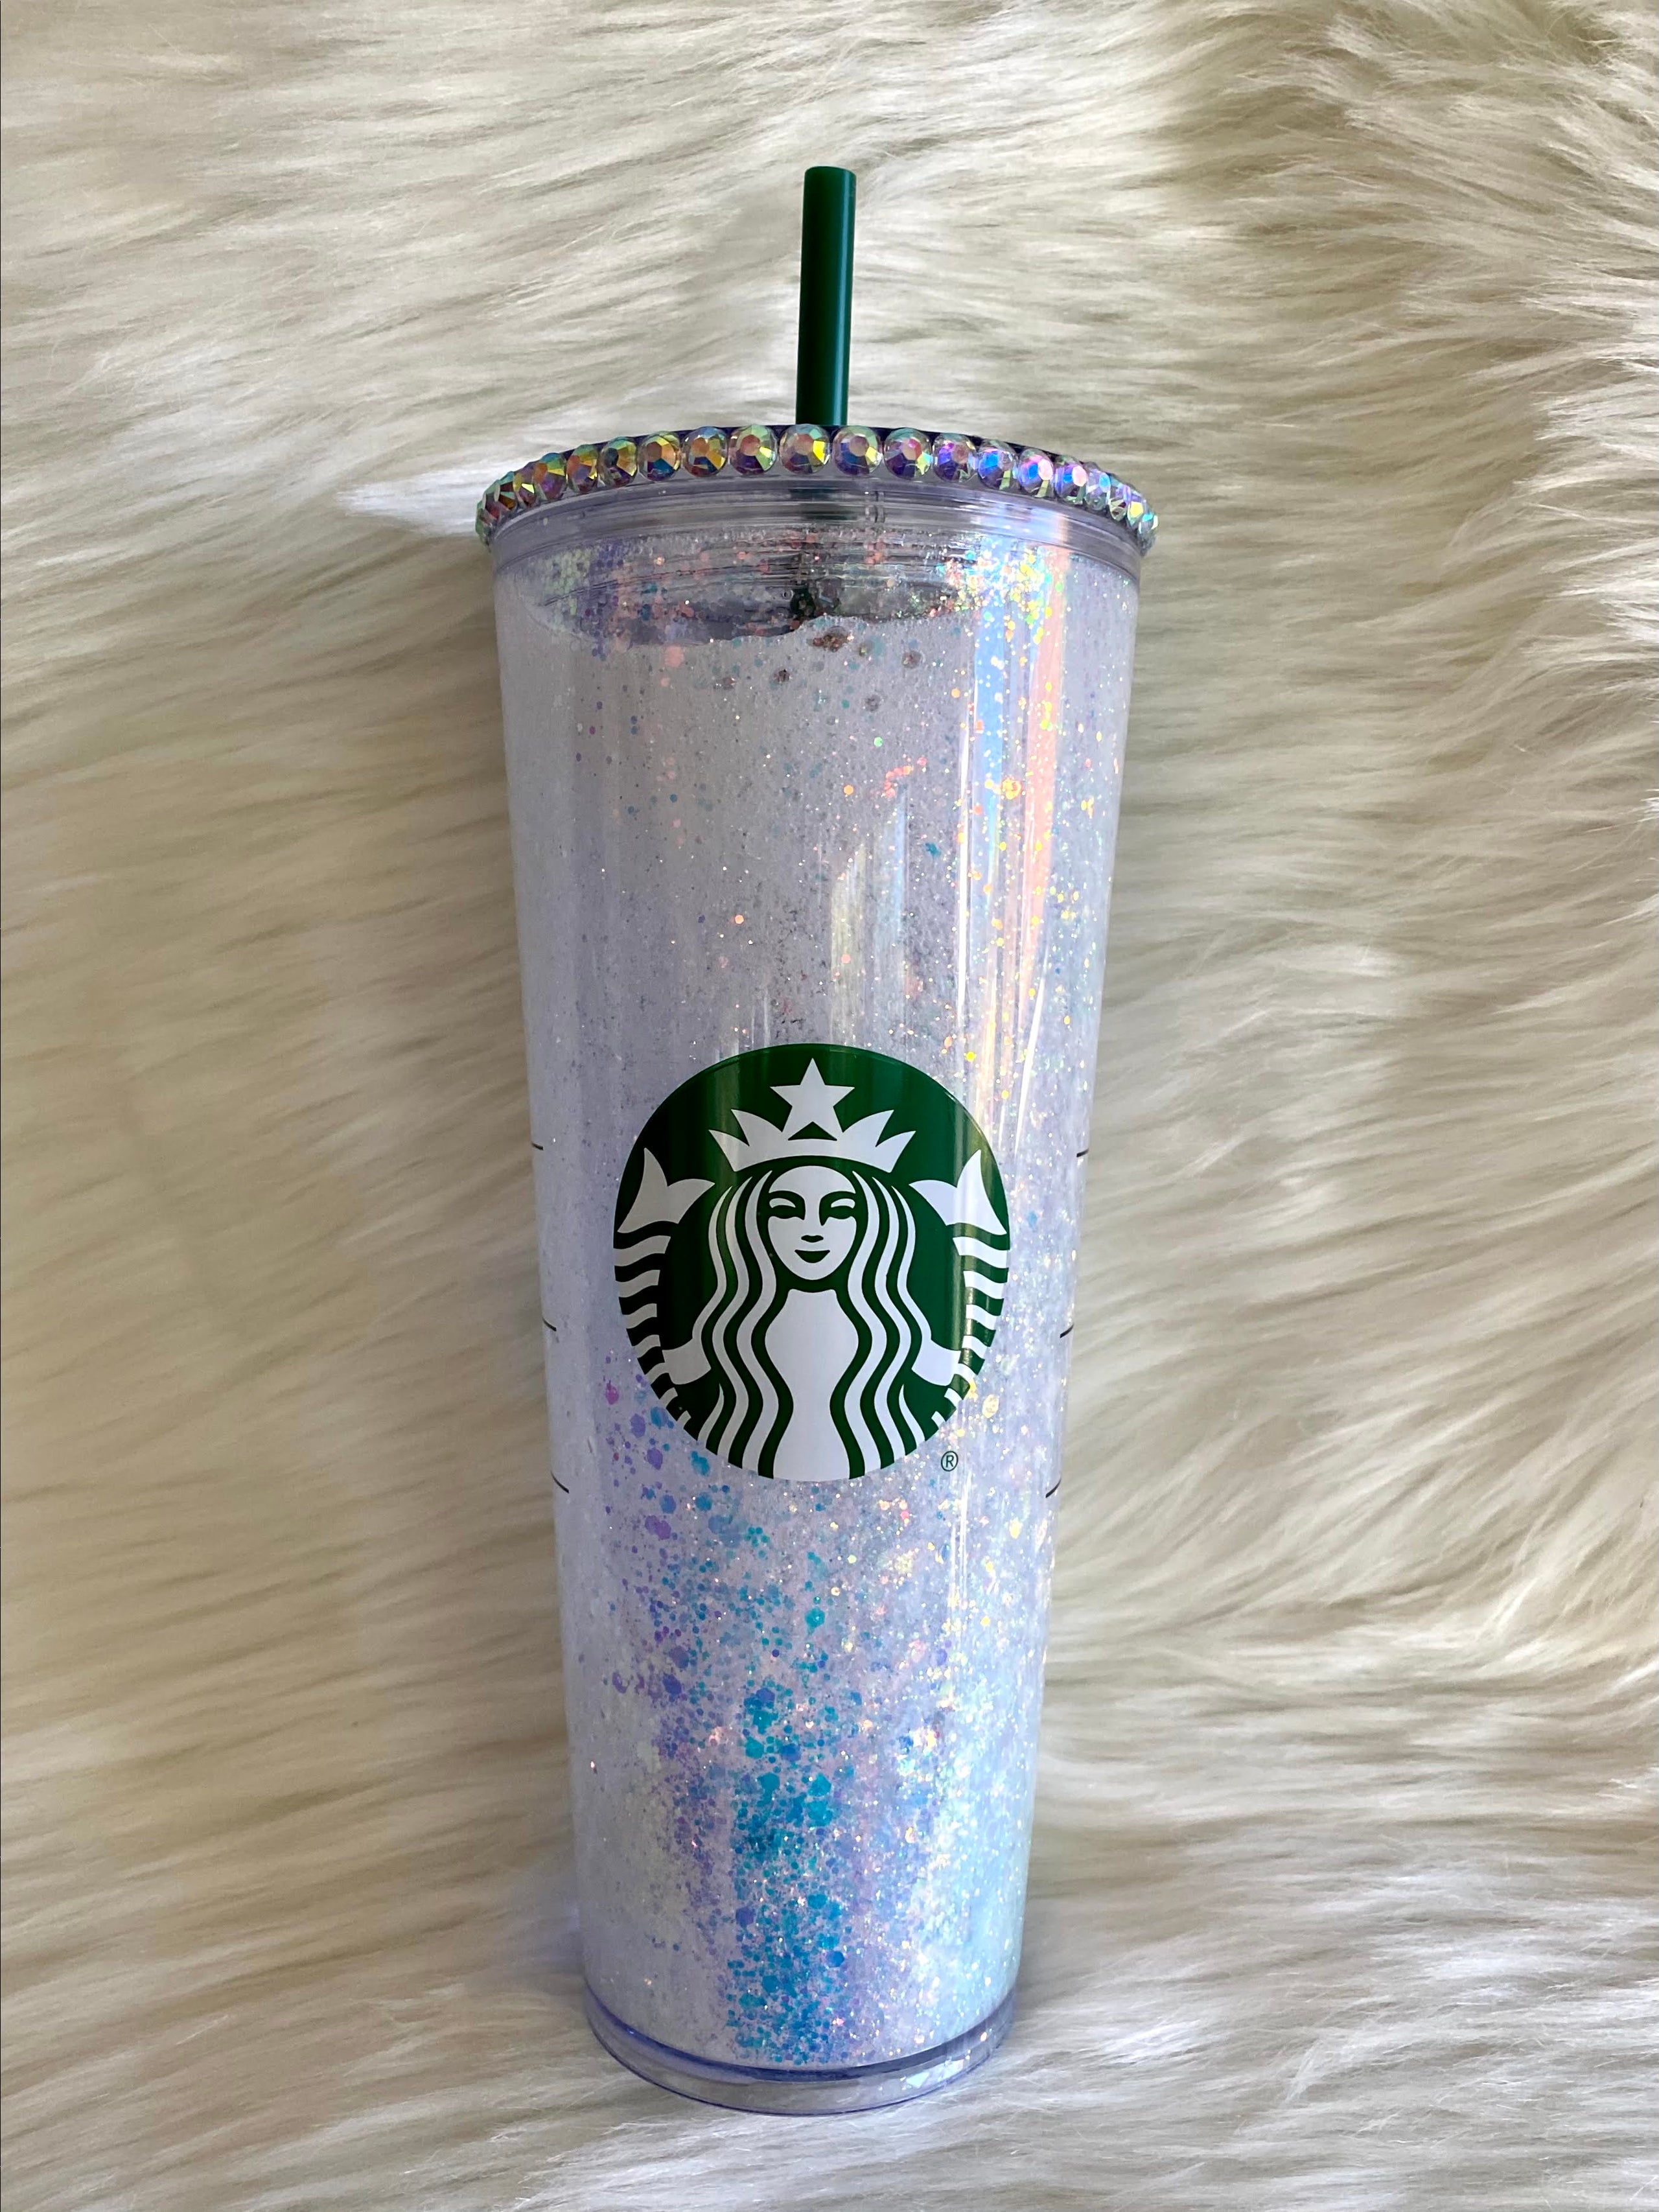 Starbucks Snowglobe